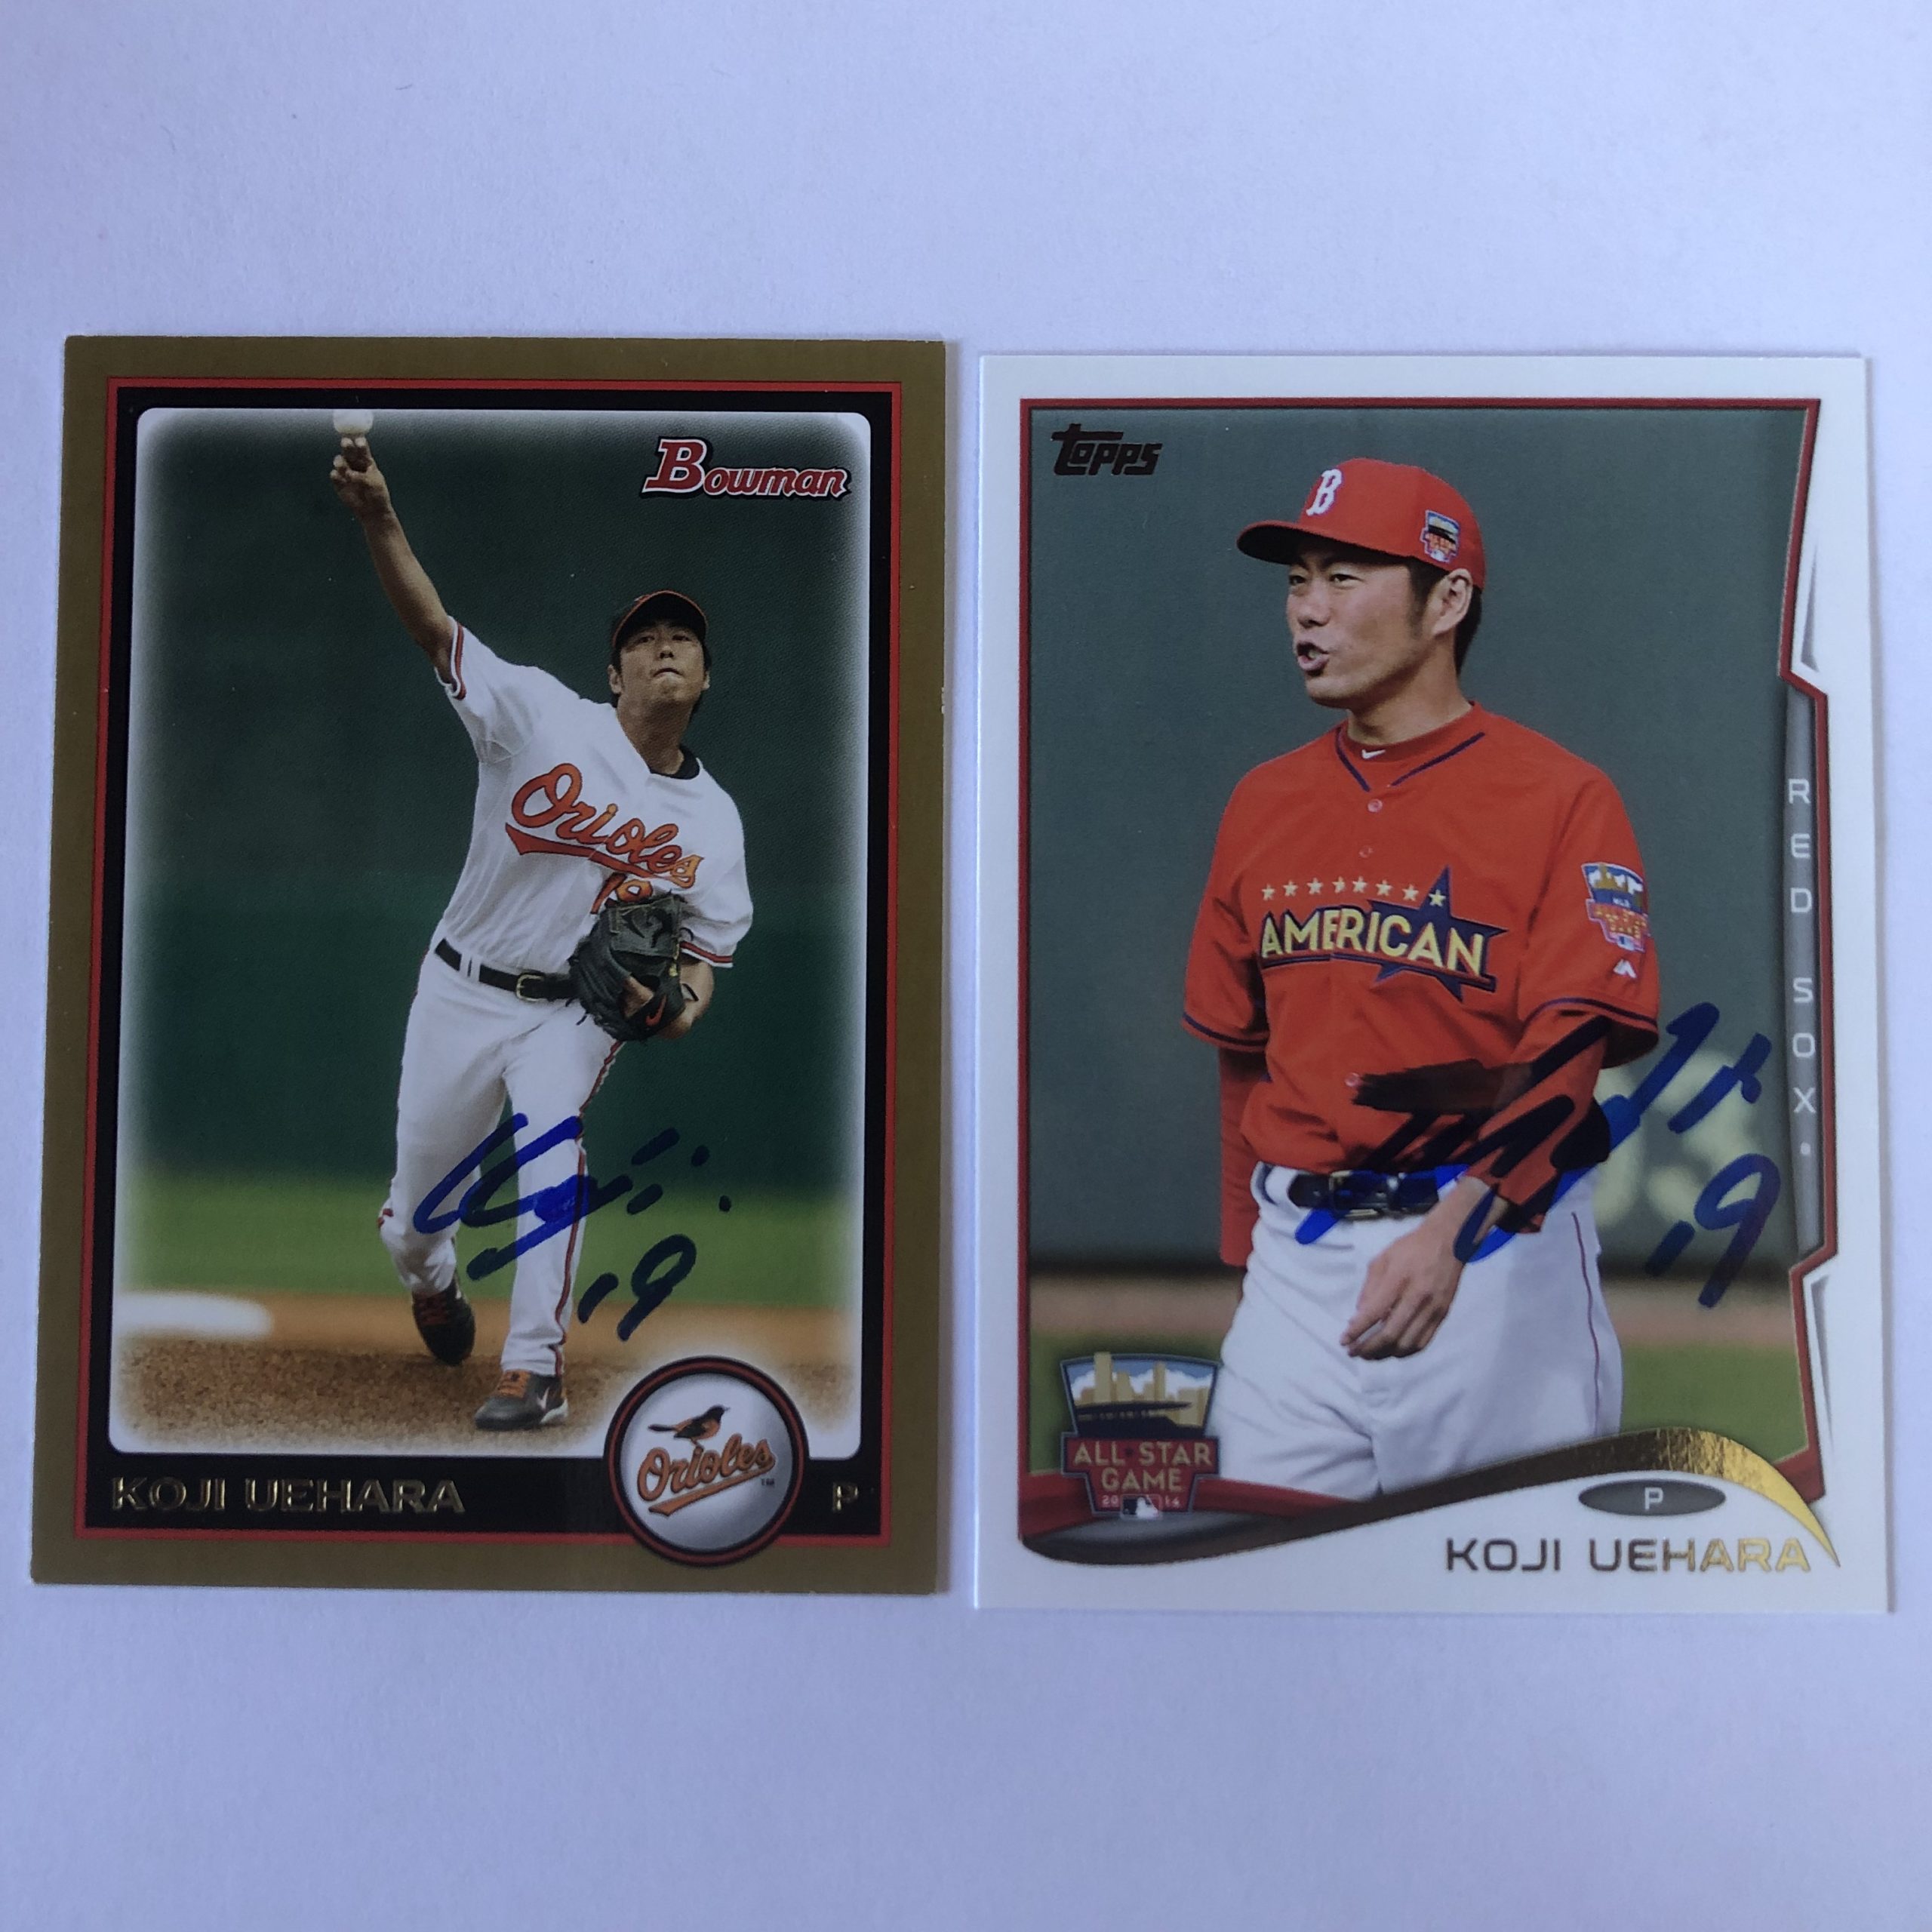 Koji Uehara Signed MLB Trading Cards (two variations)